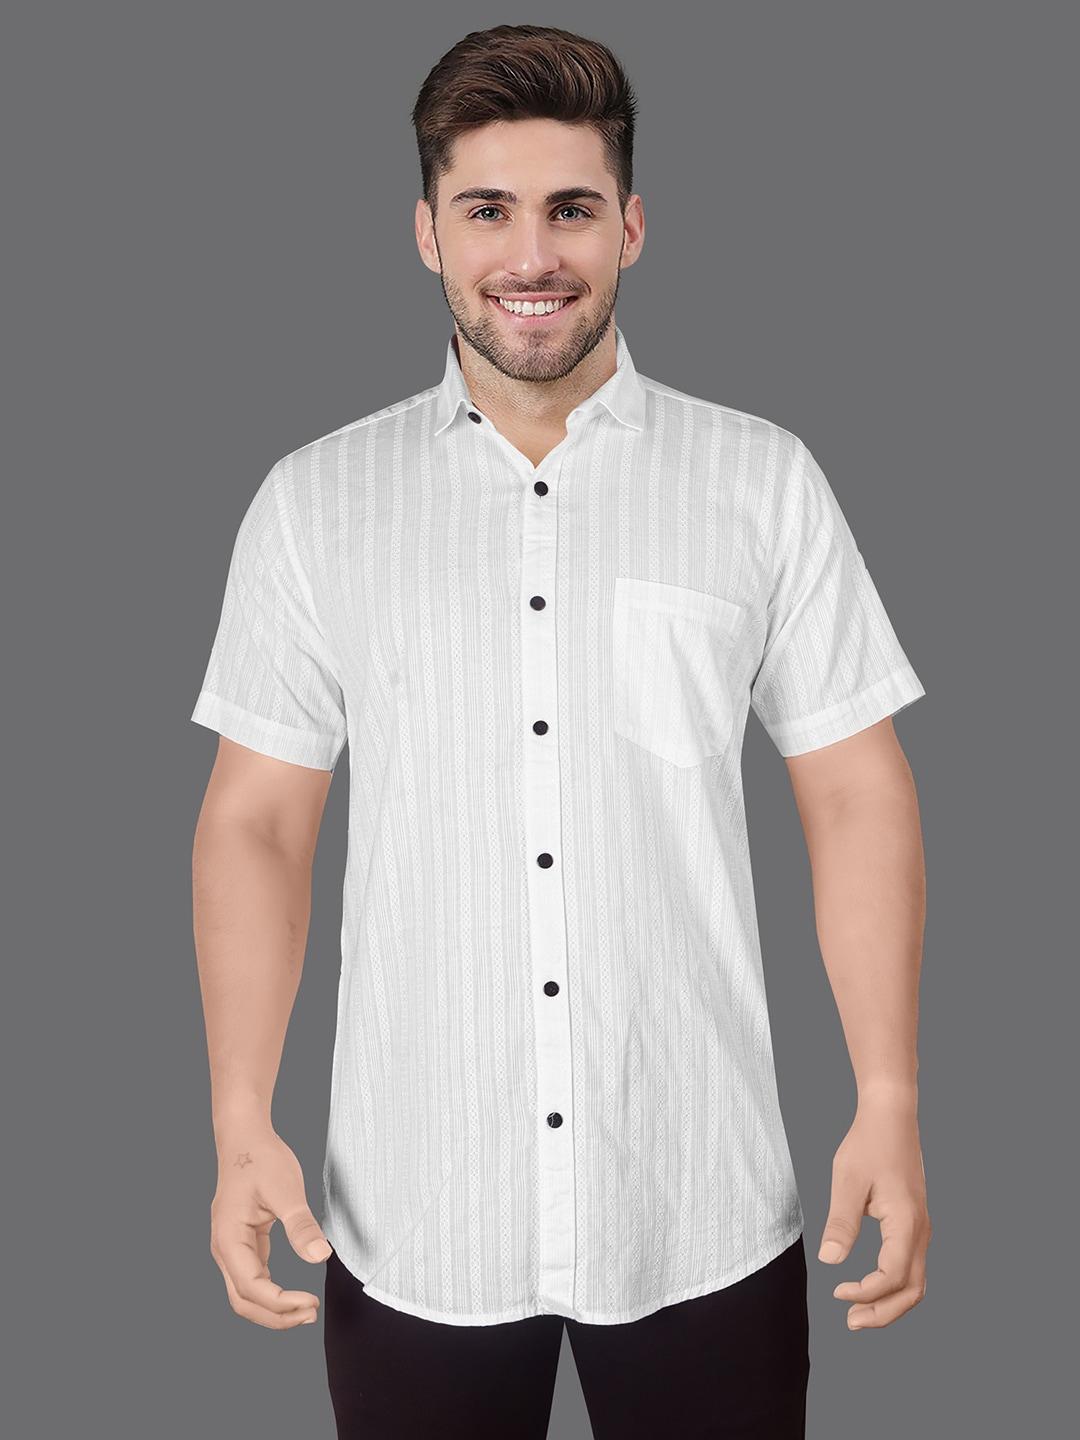 jb-just-black-premium-slim-fit-striped-spread-collar-short-sleeves-cotton-casual-shirt